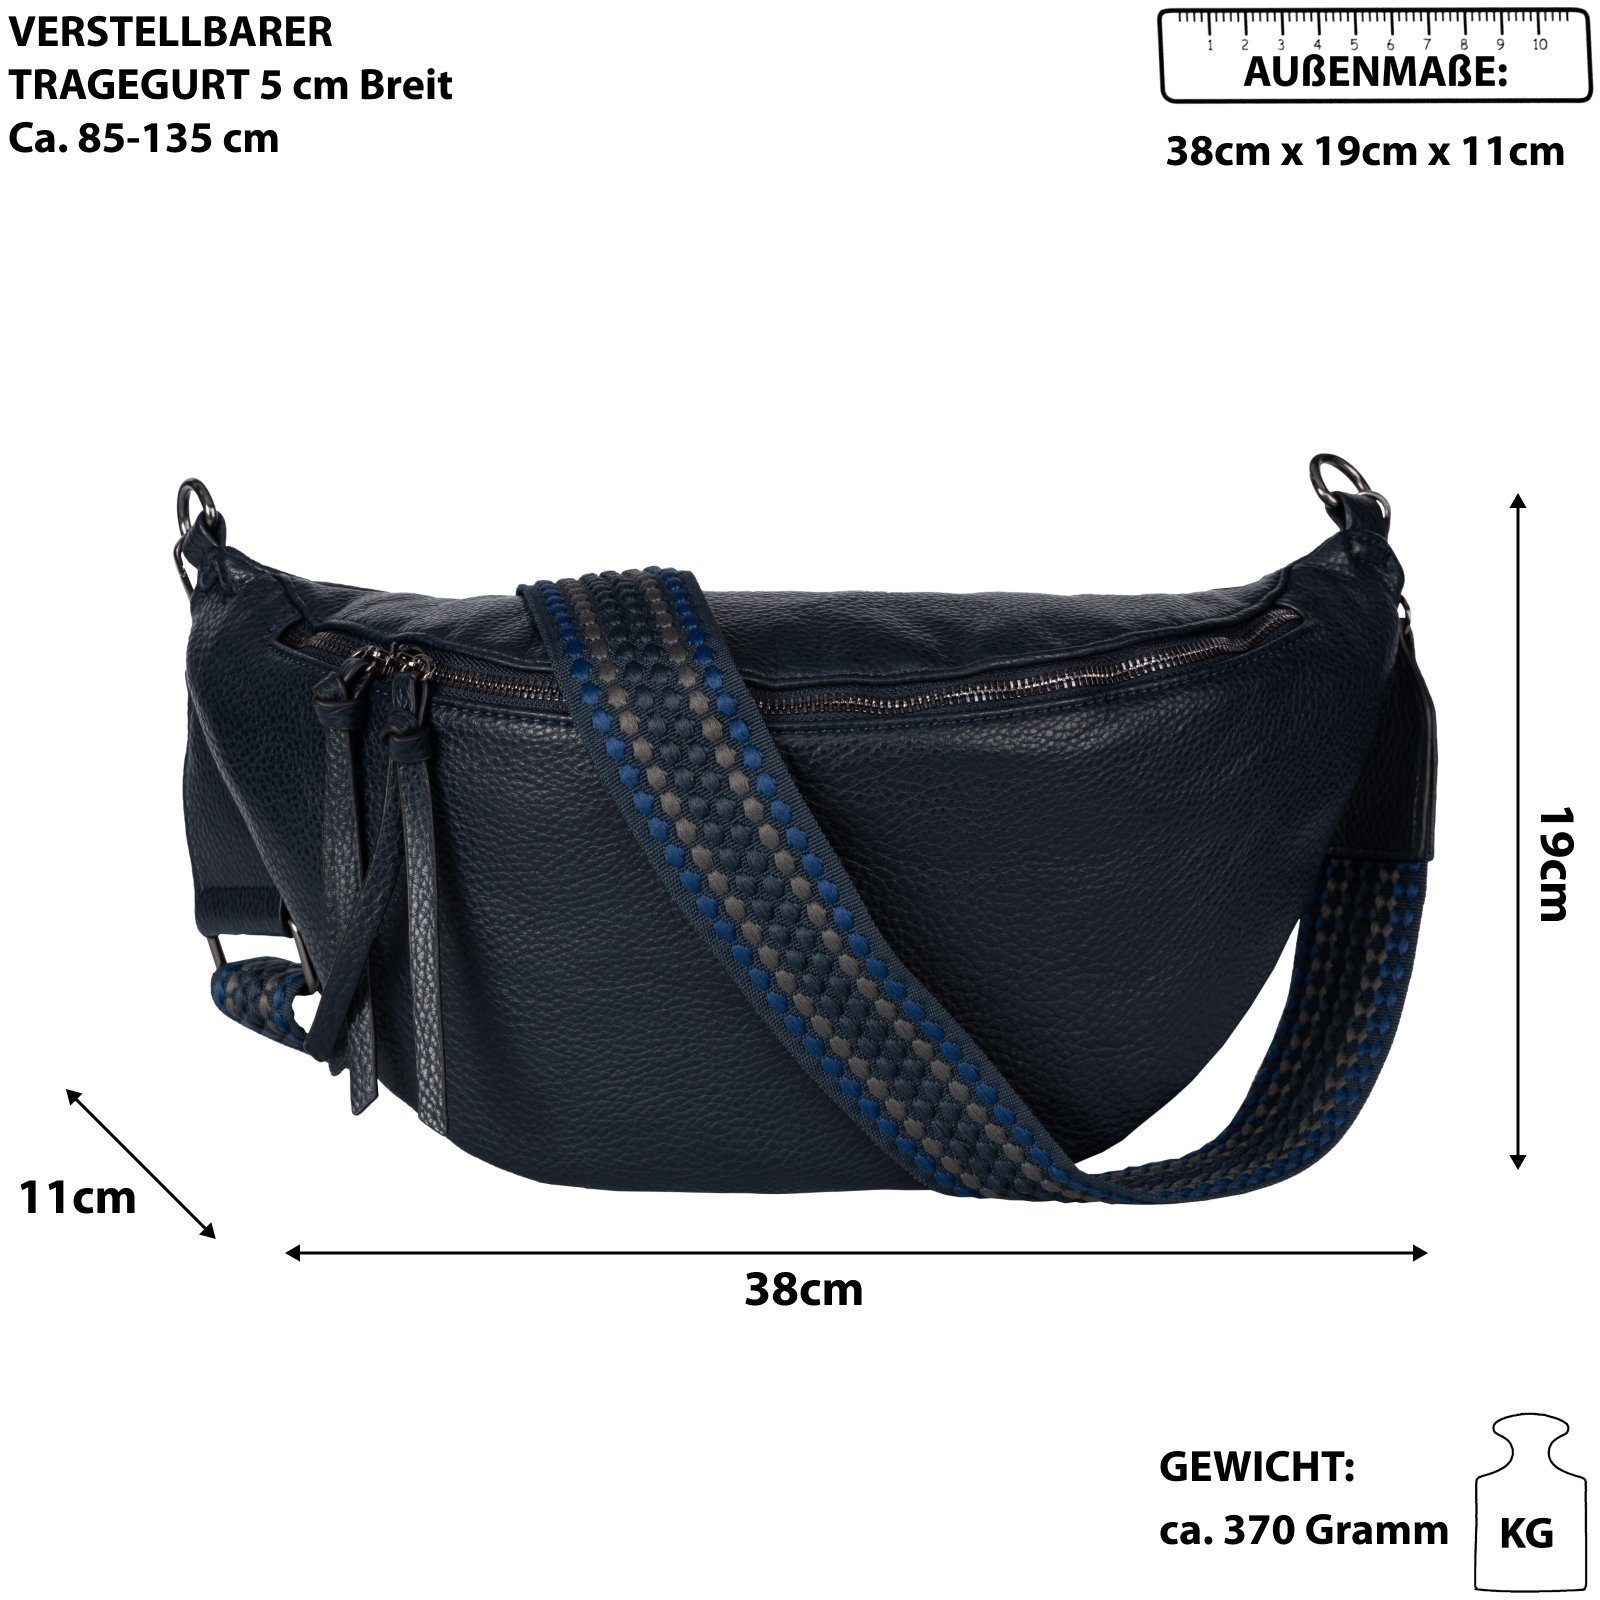 EAAKIE Gürteltasche Bauchtasche Umhängetasche Kunstleder Umhängetasche Crossbody-Bag als CrossOver, Italy-D, Schultertasche, Hüfttasche D.BLUE tragbar